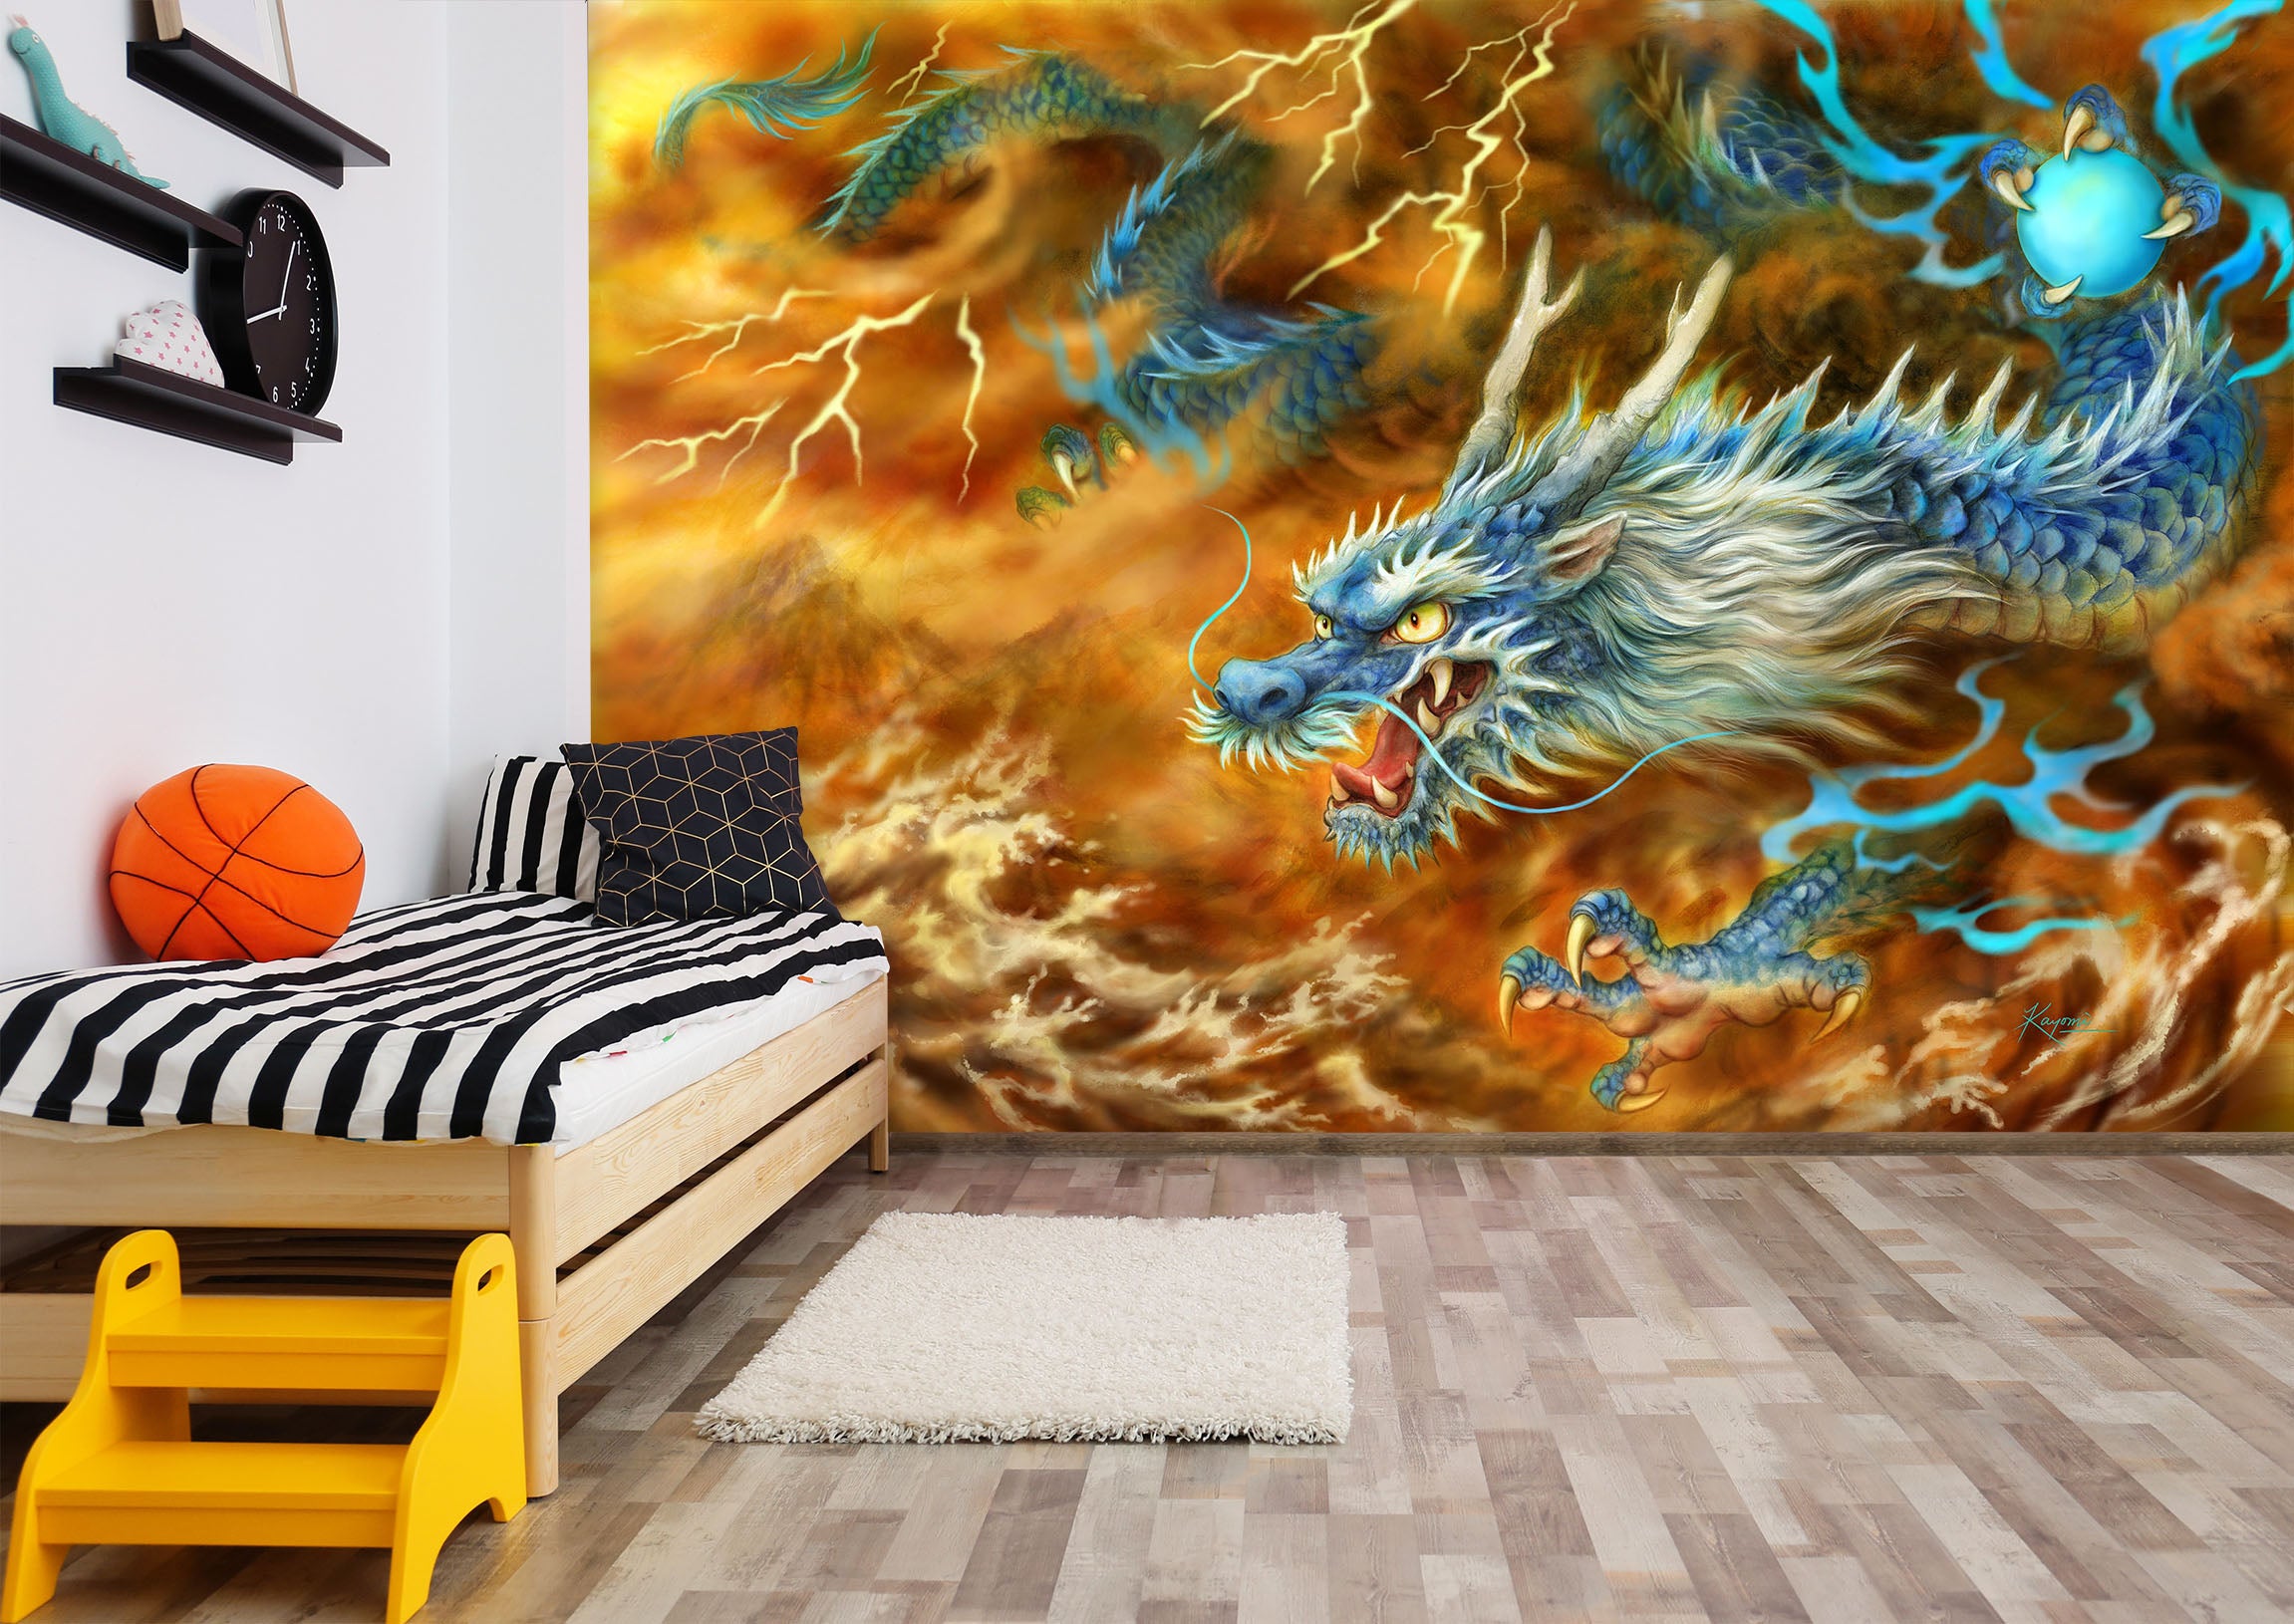 3D Dragon Lightning 5415 Kayomi Harai Wall Mural Wall Murals